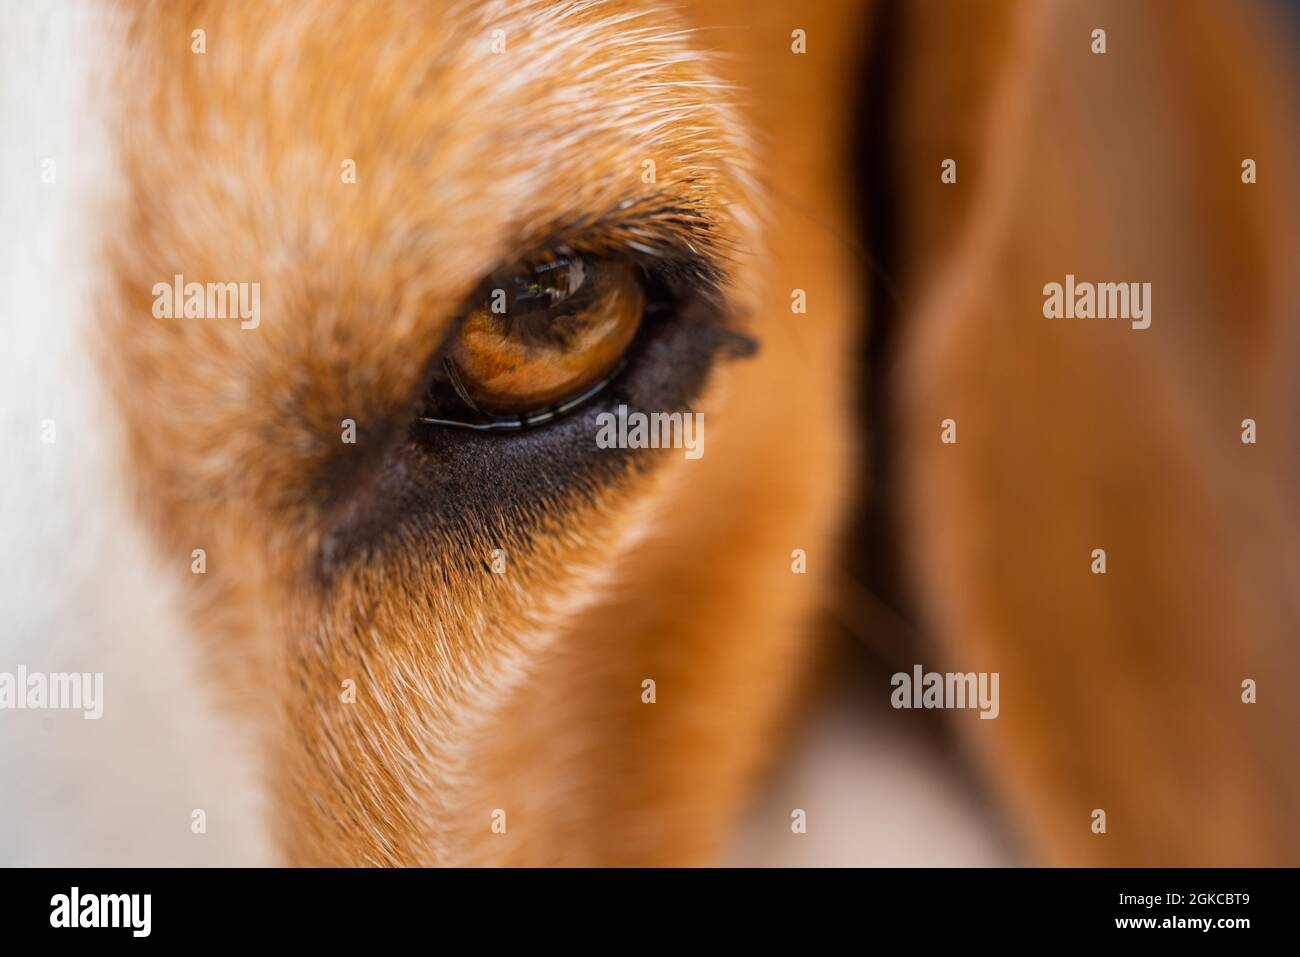 A closeup of a beagle dog eye. Stock Photo